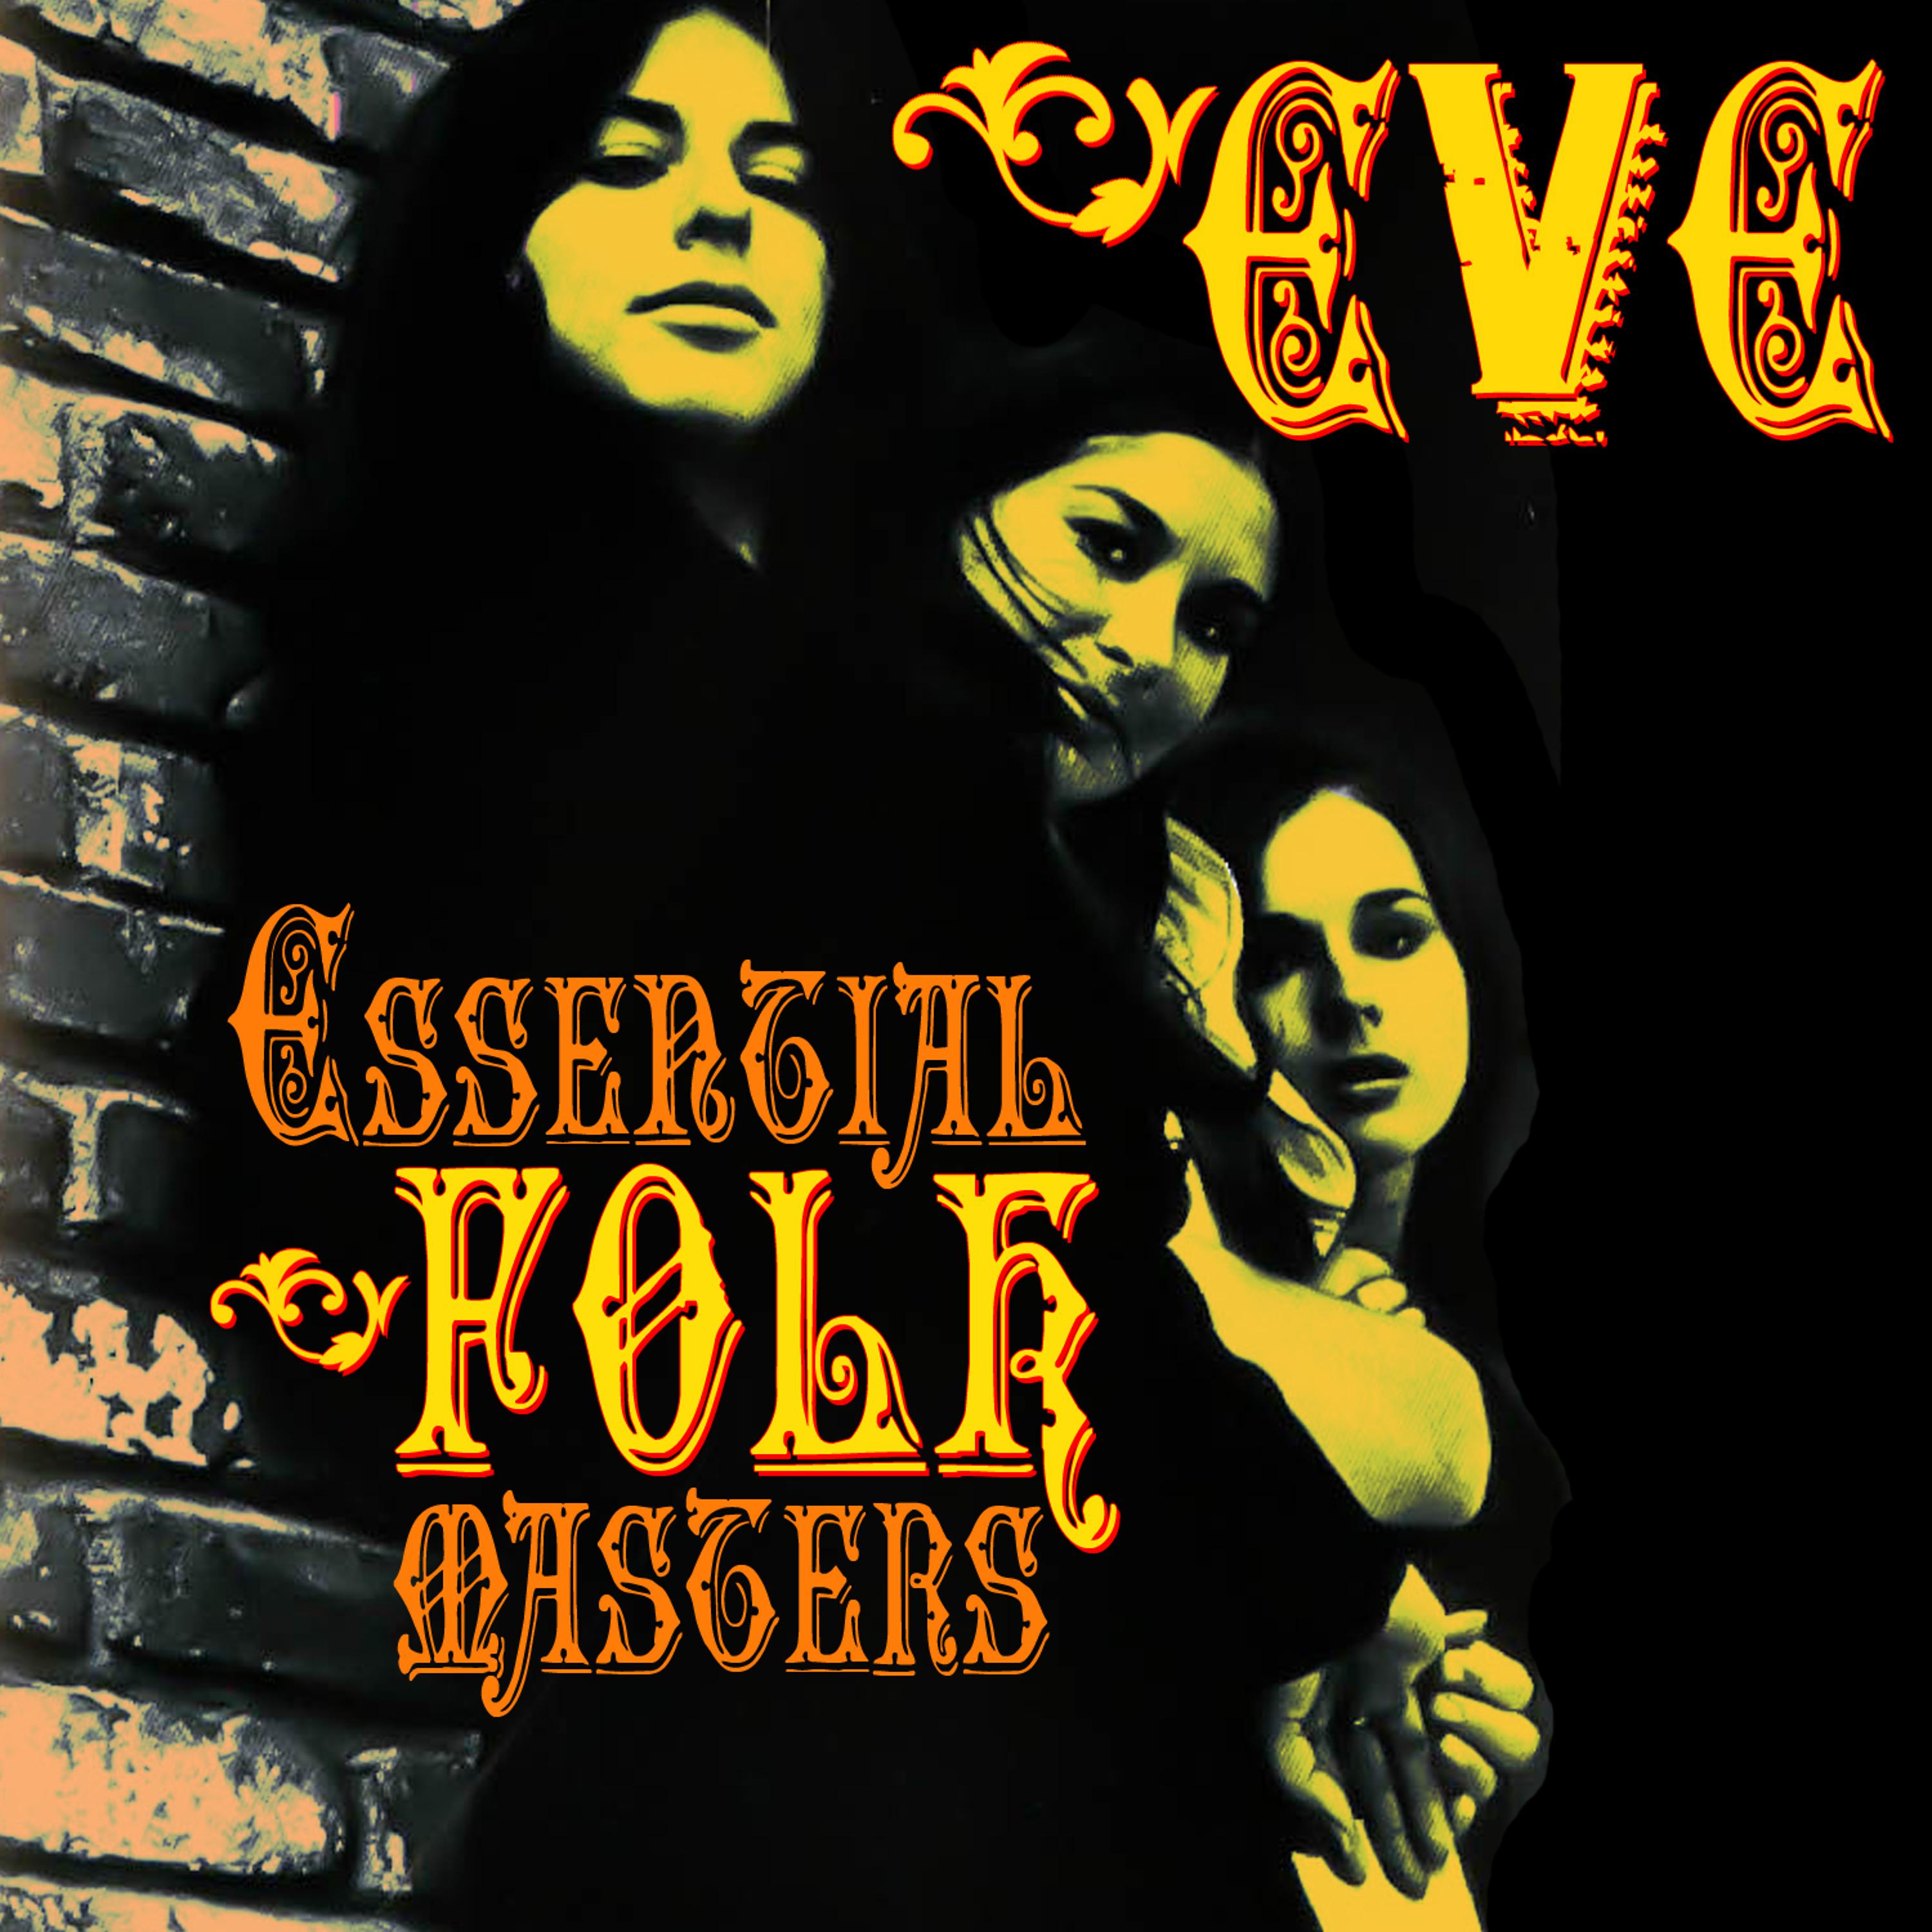 Постер альбома Essential Folk Masters